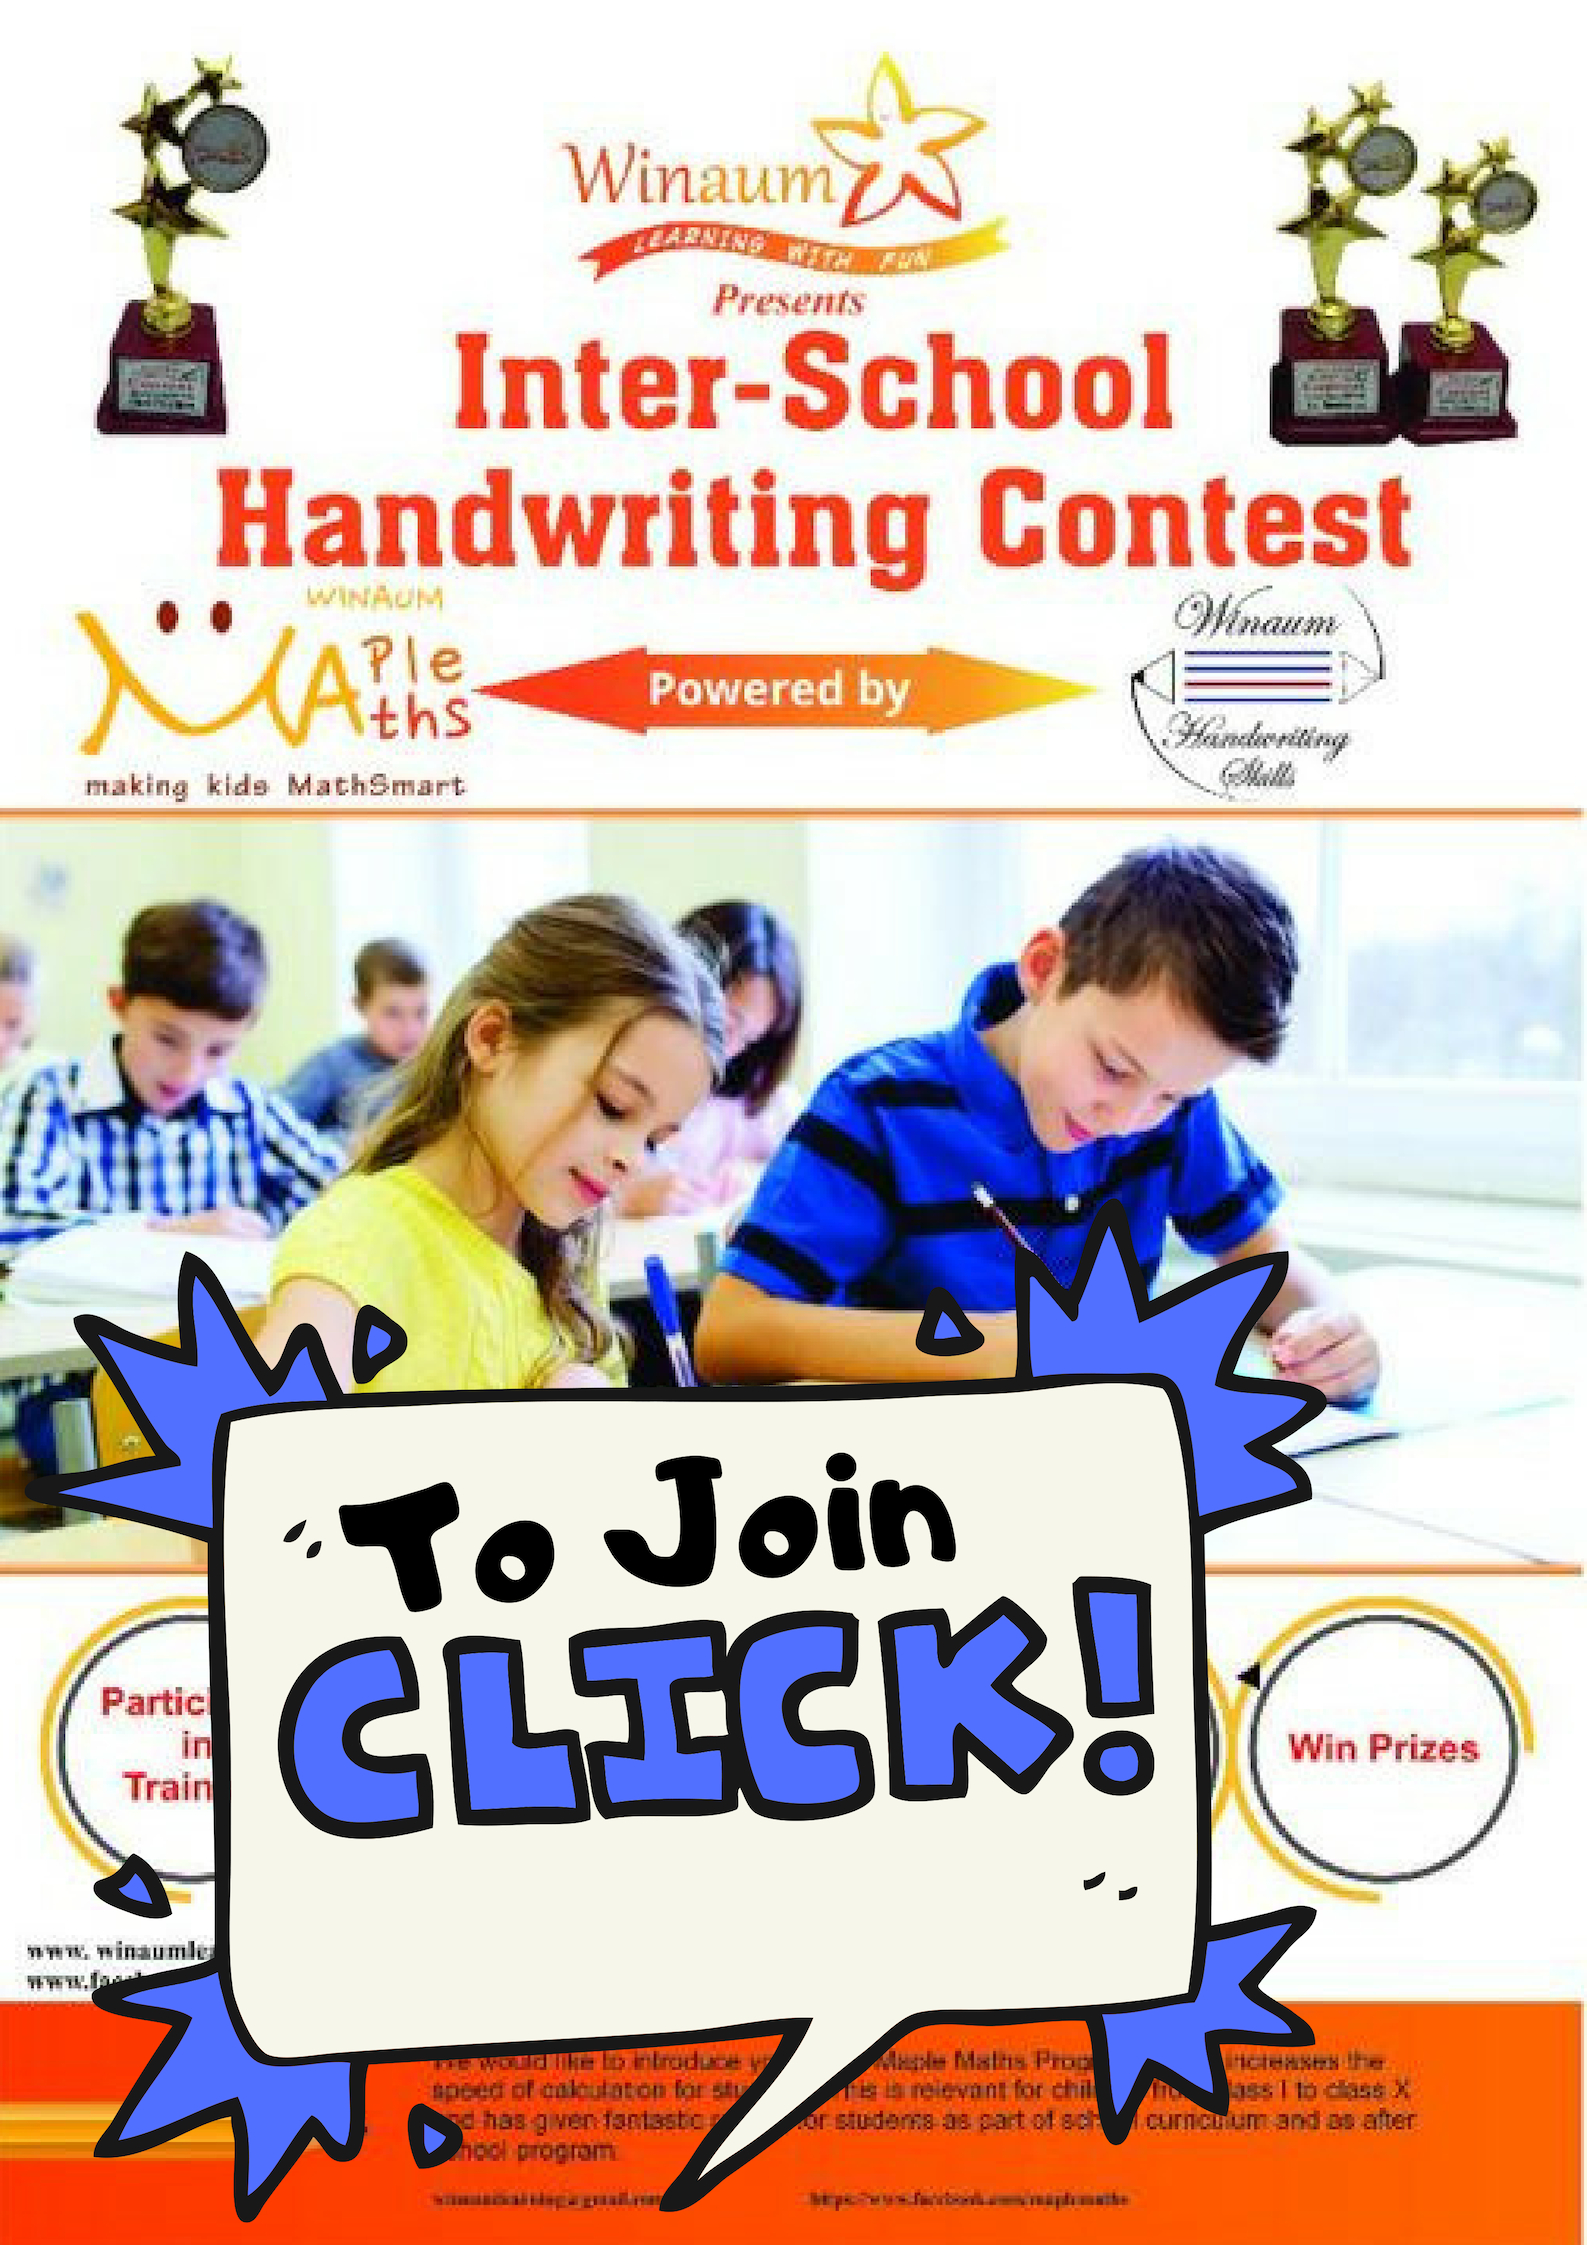 IHC Interschool Handwriting Contest Winaum Learning